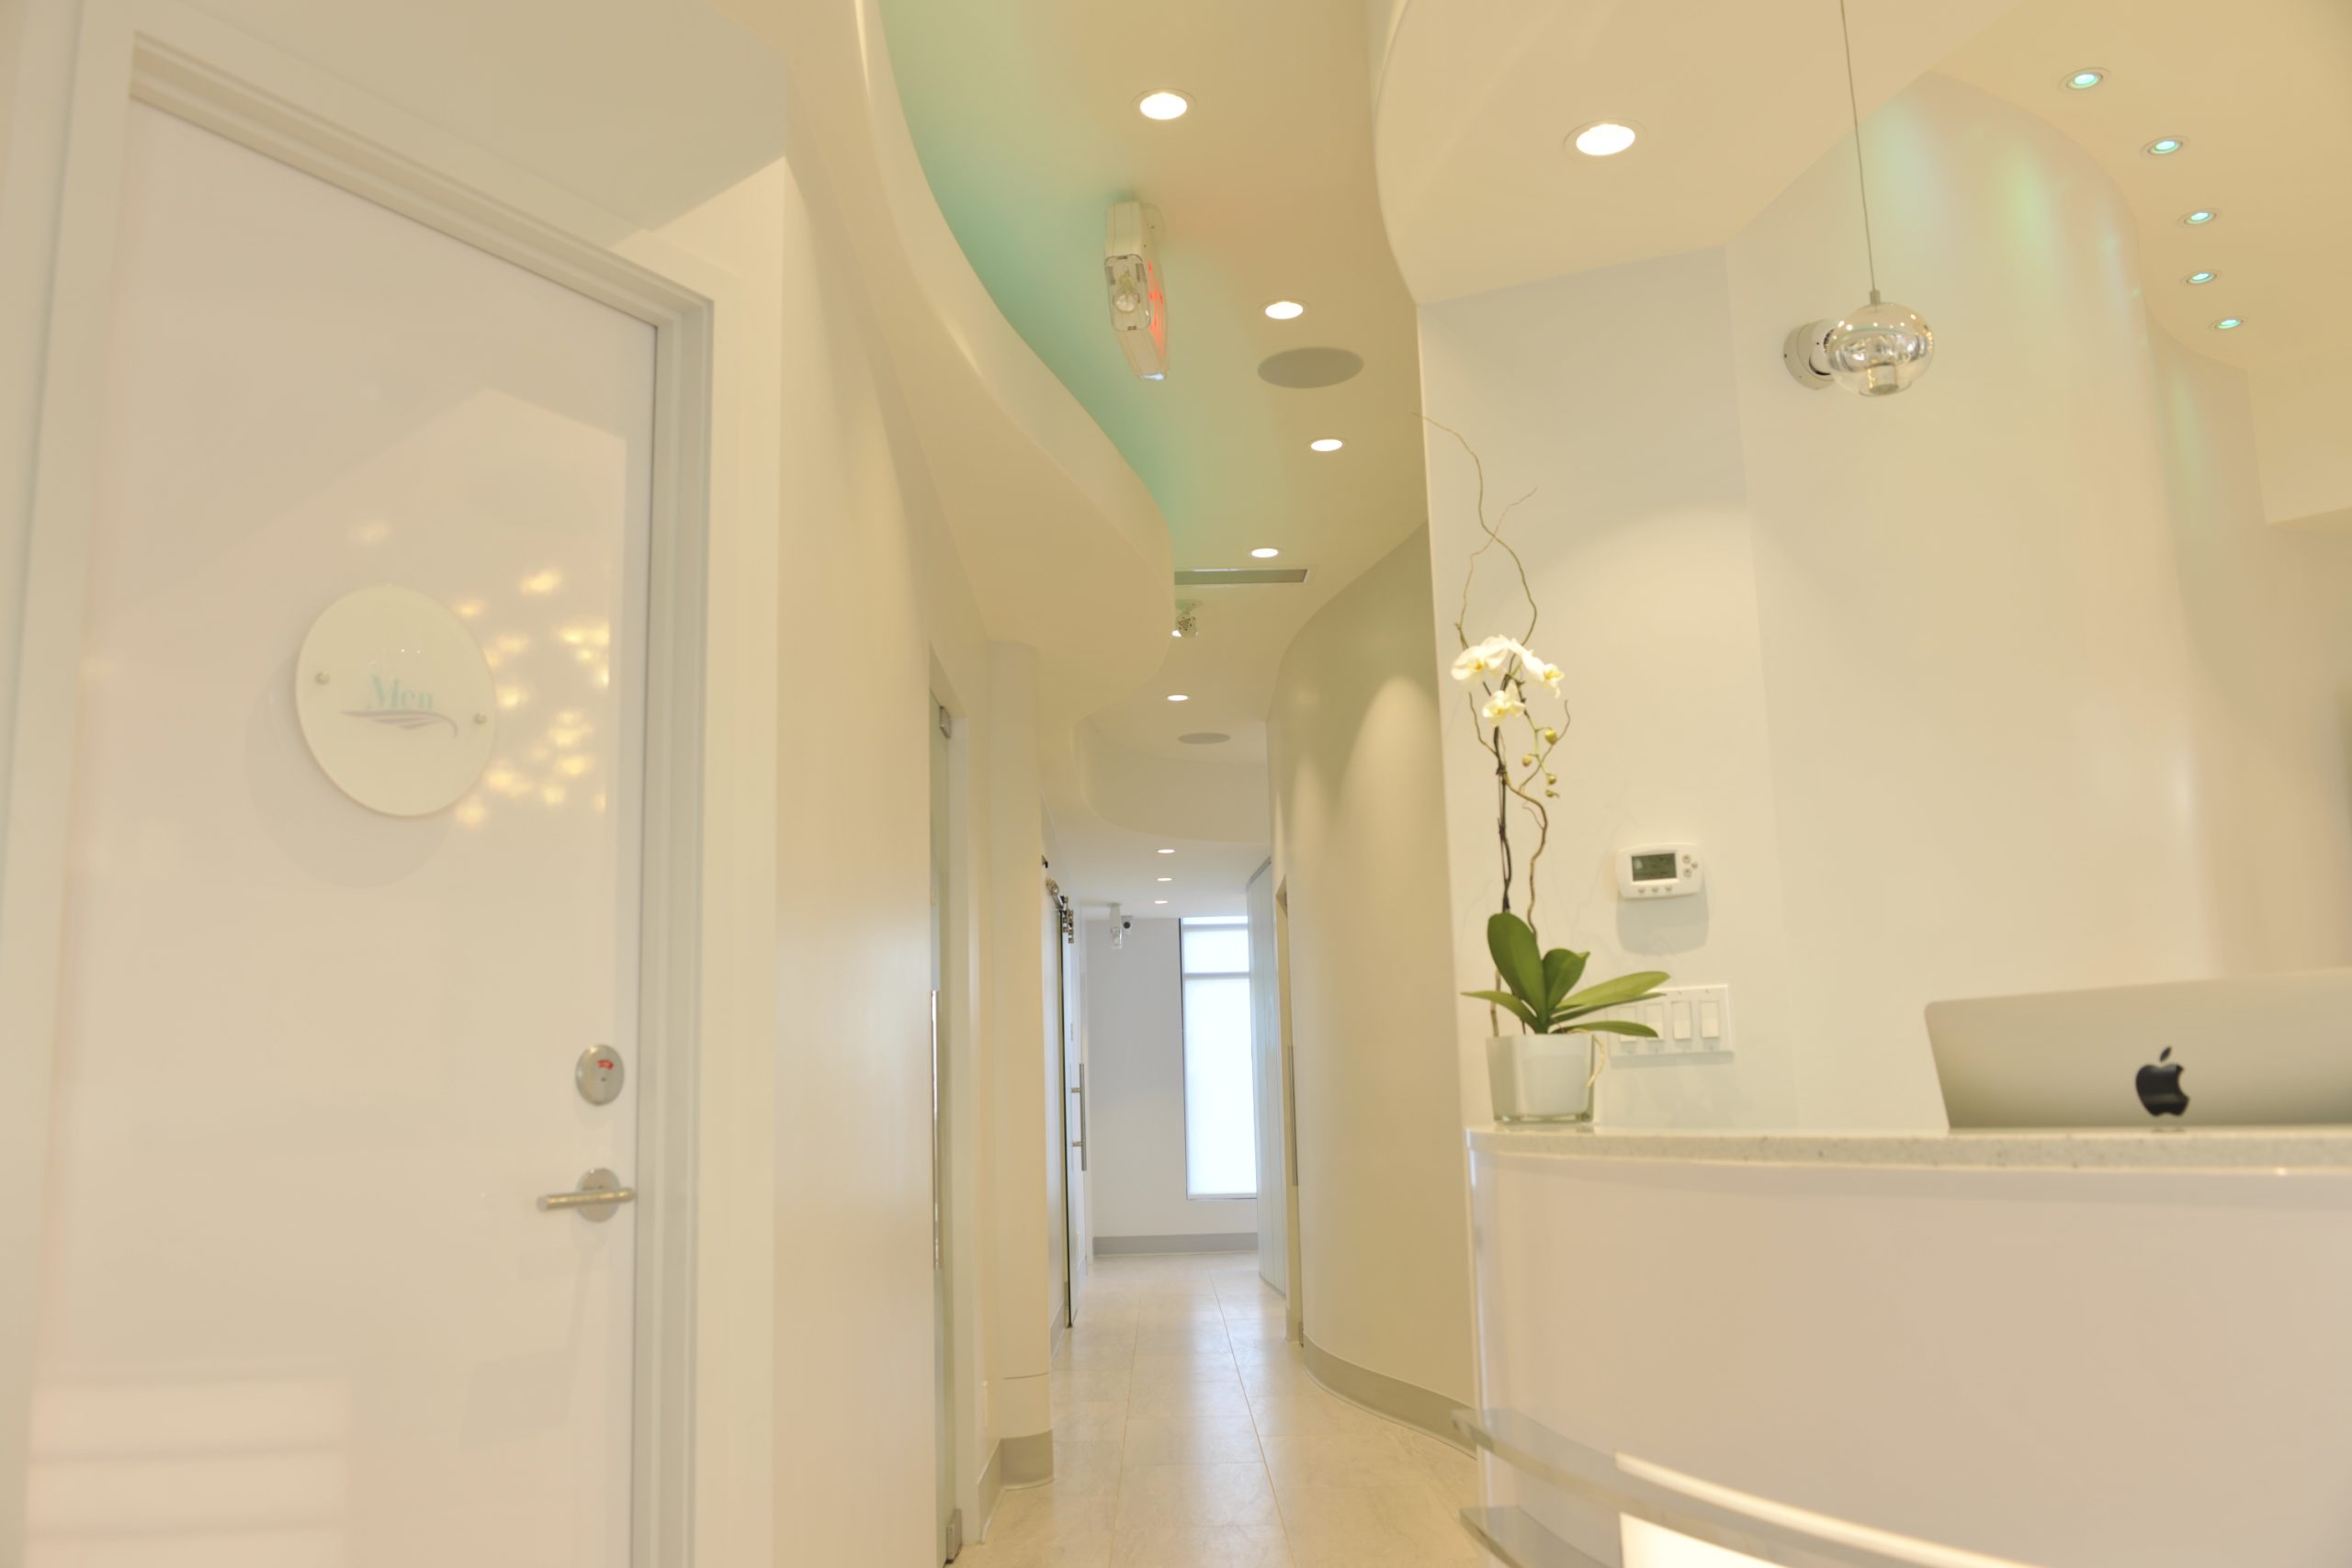 Natural lighting coming through dental clinic hallway